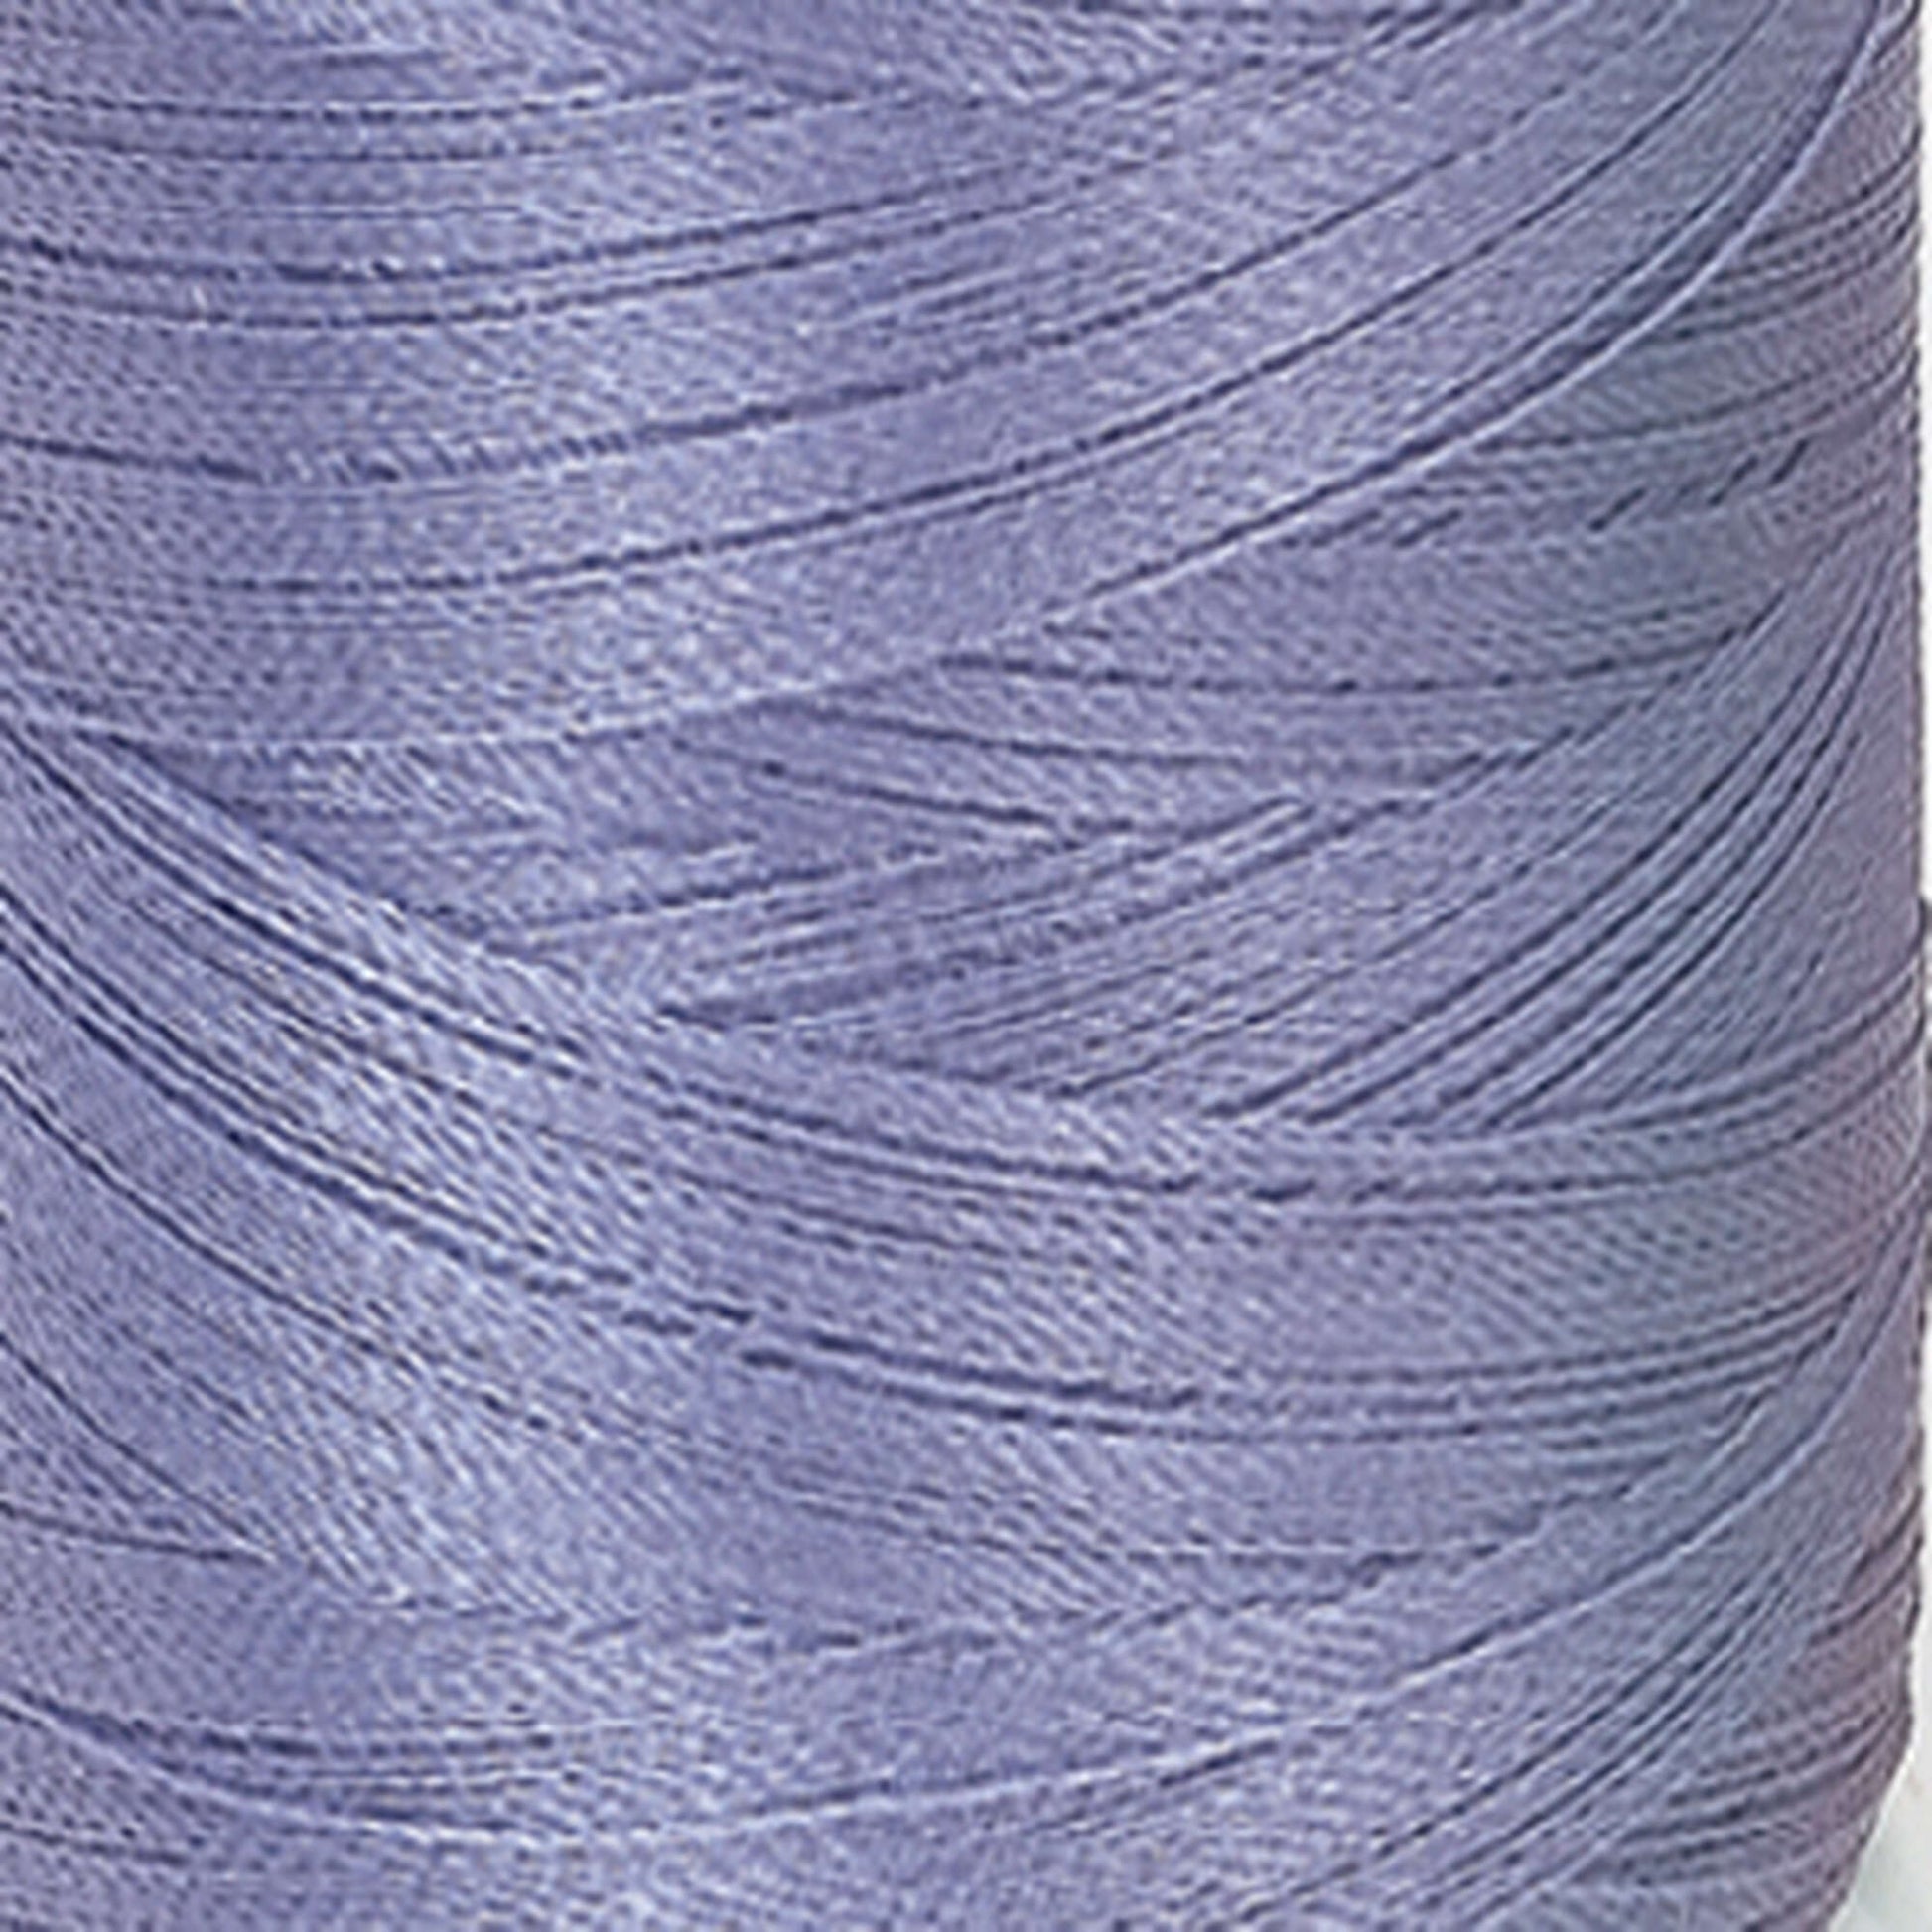 Coats & Clark Machine Embroidery Thread 1100 yds, Yale Blue